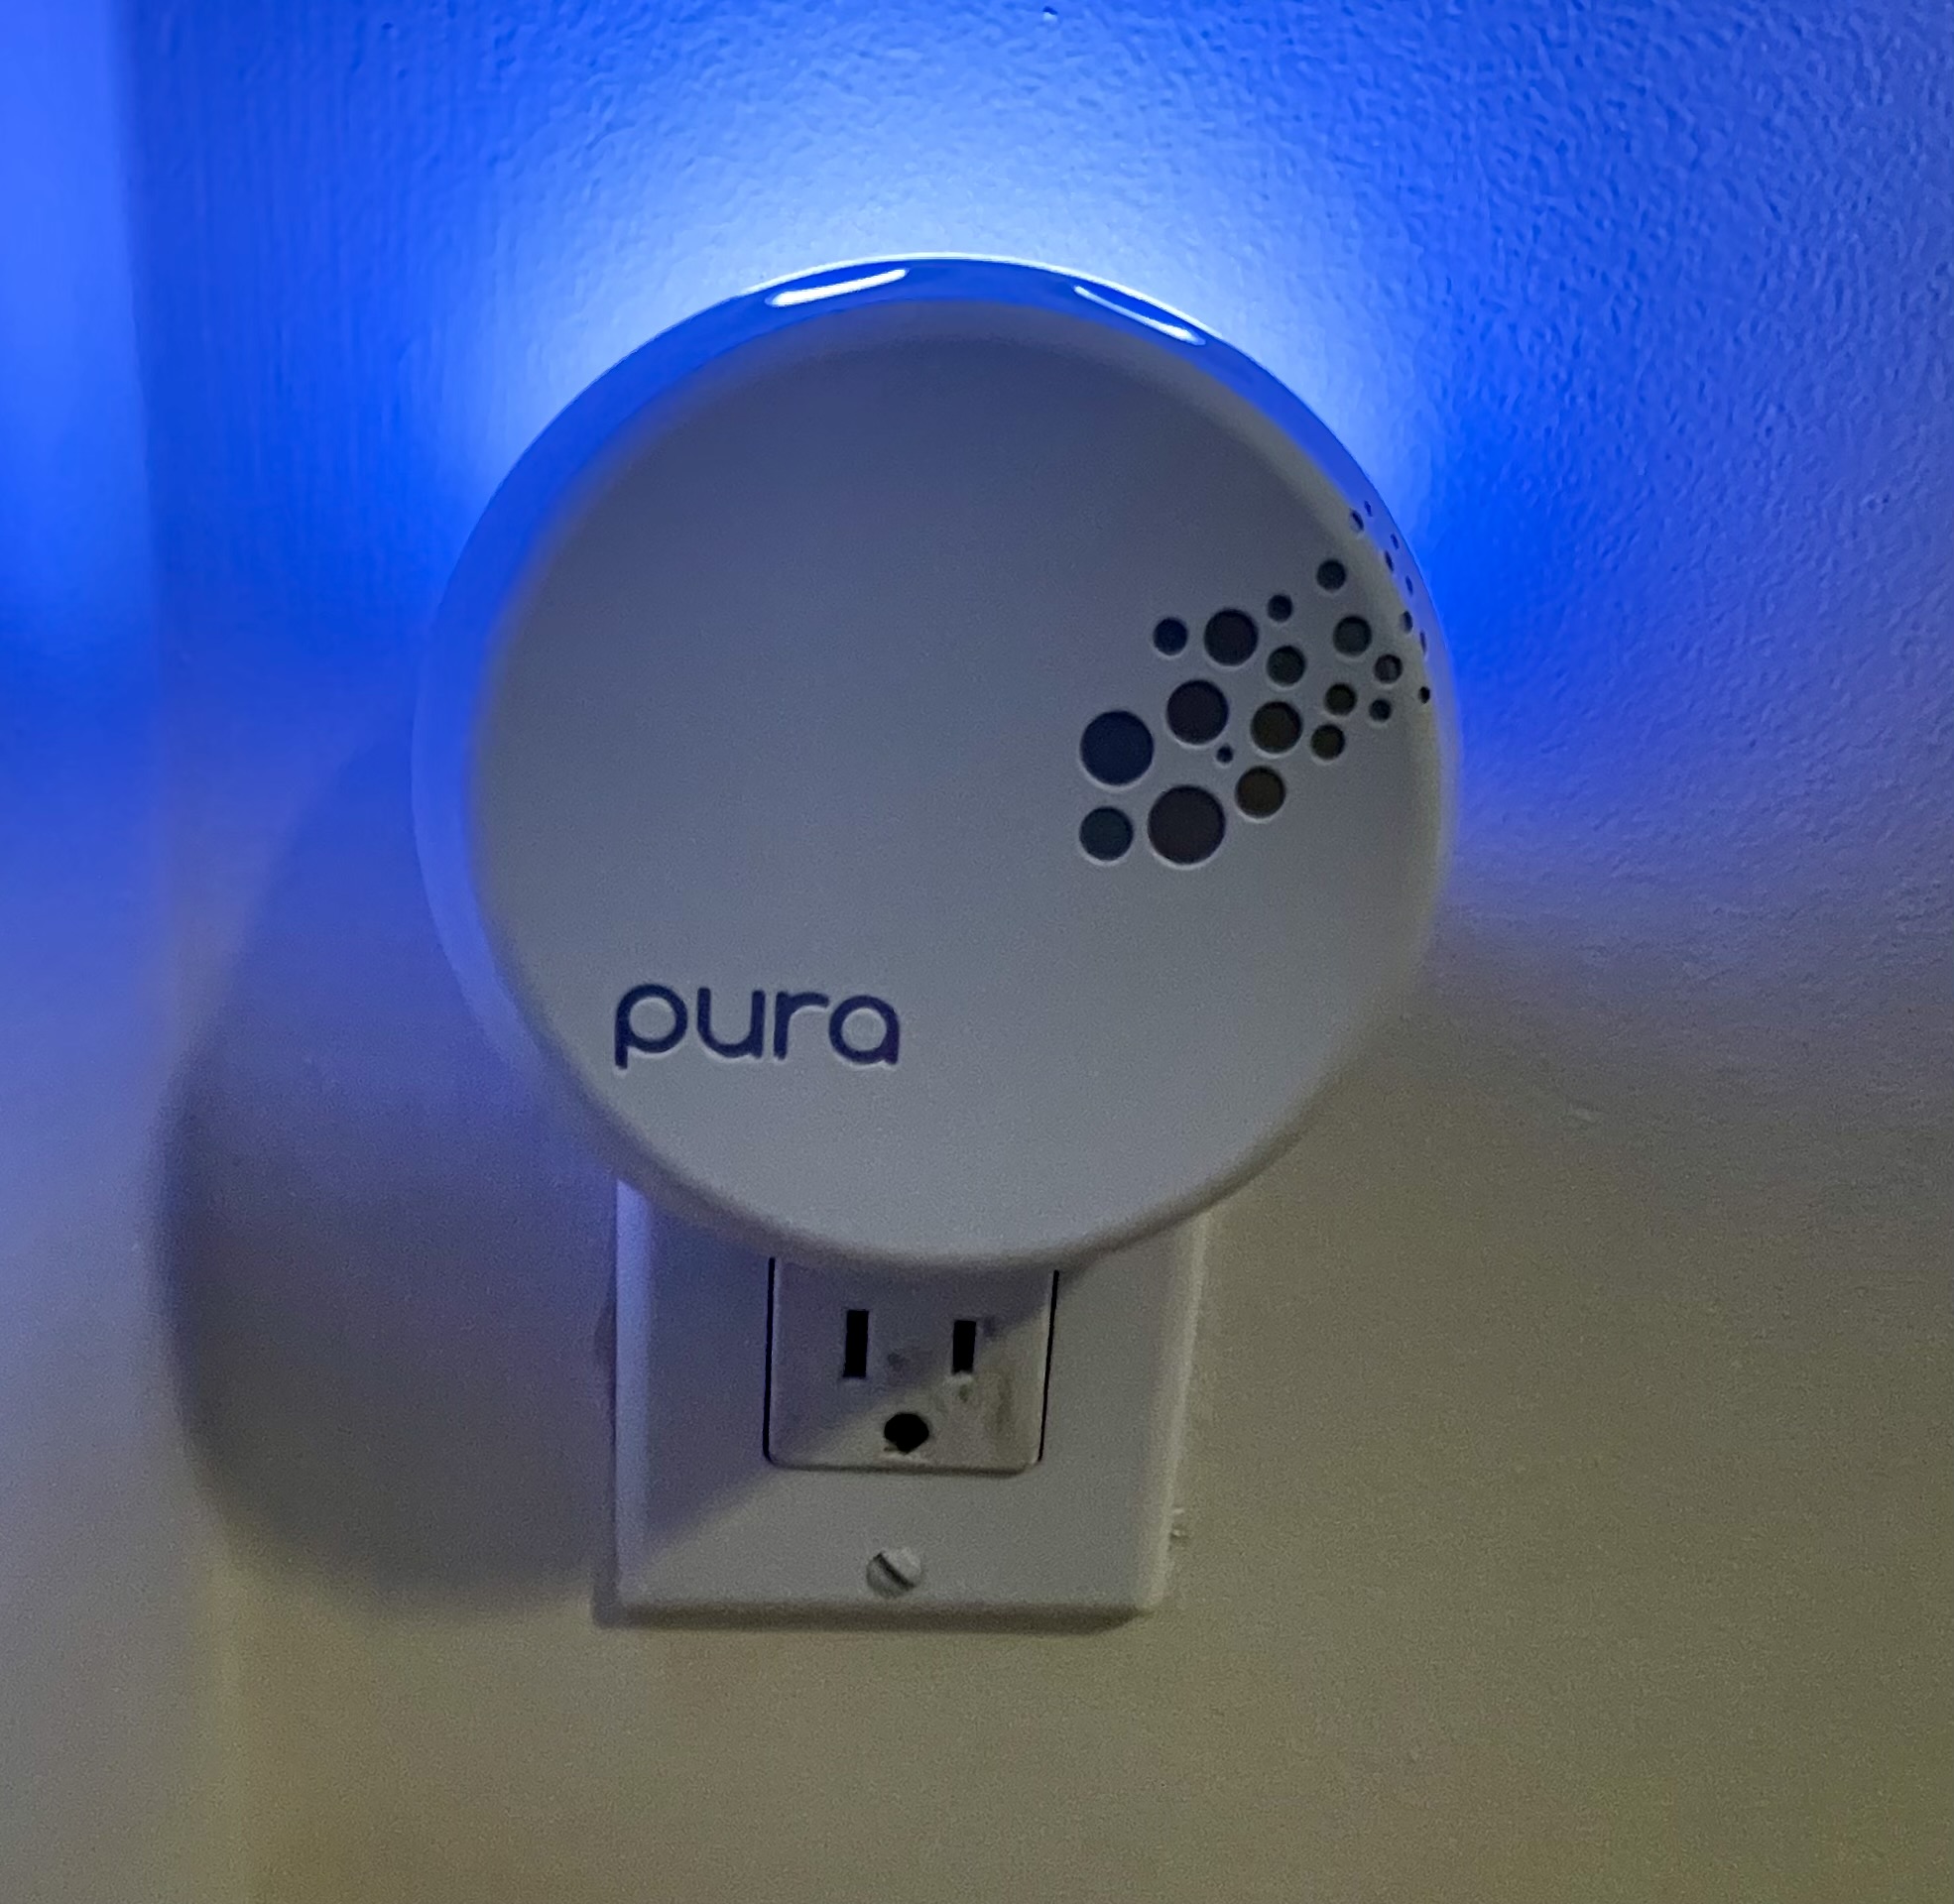 pura-nest-luxury-fall-scent-diffuser-smart-fragrance-device